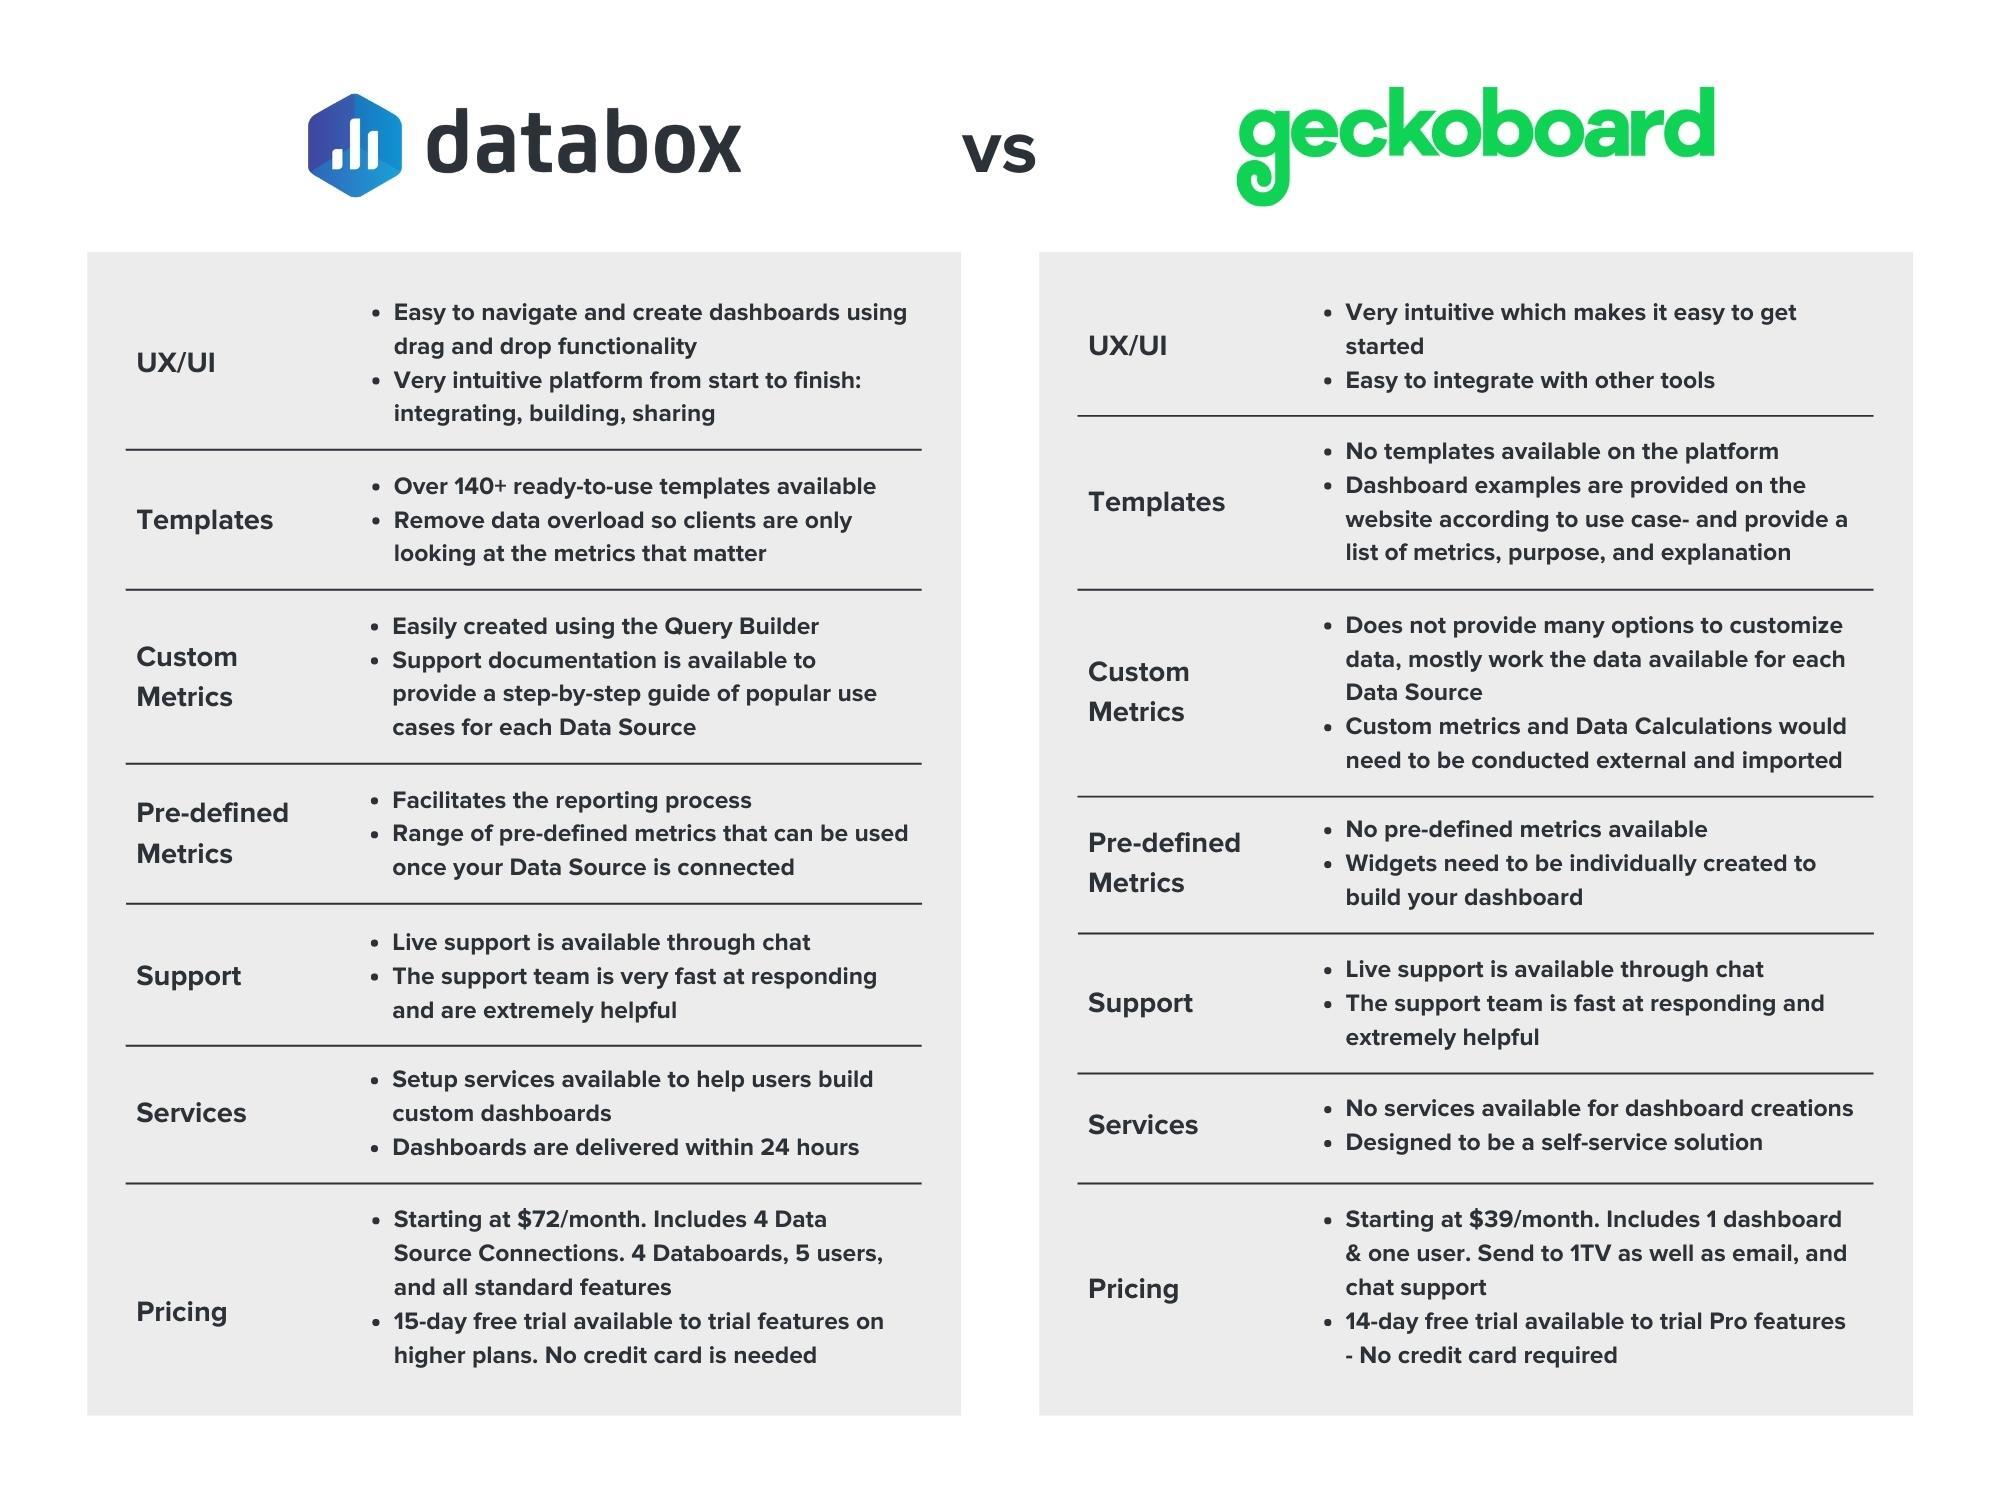 Databox vs Geckoboard at a glance